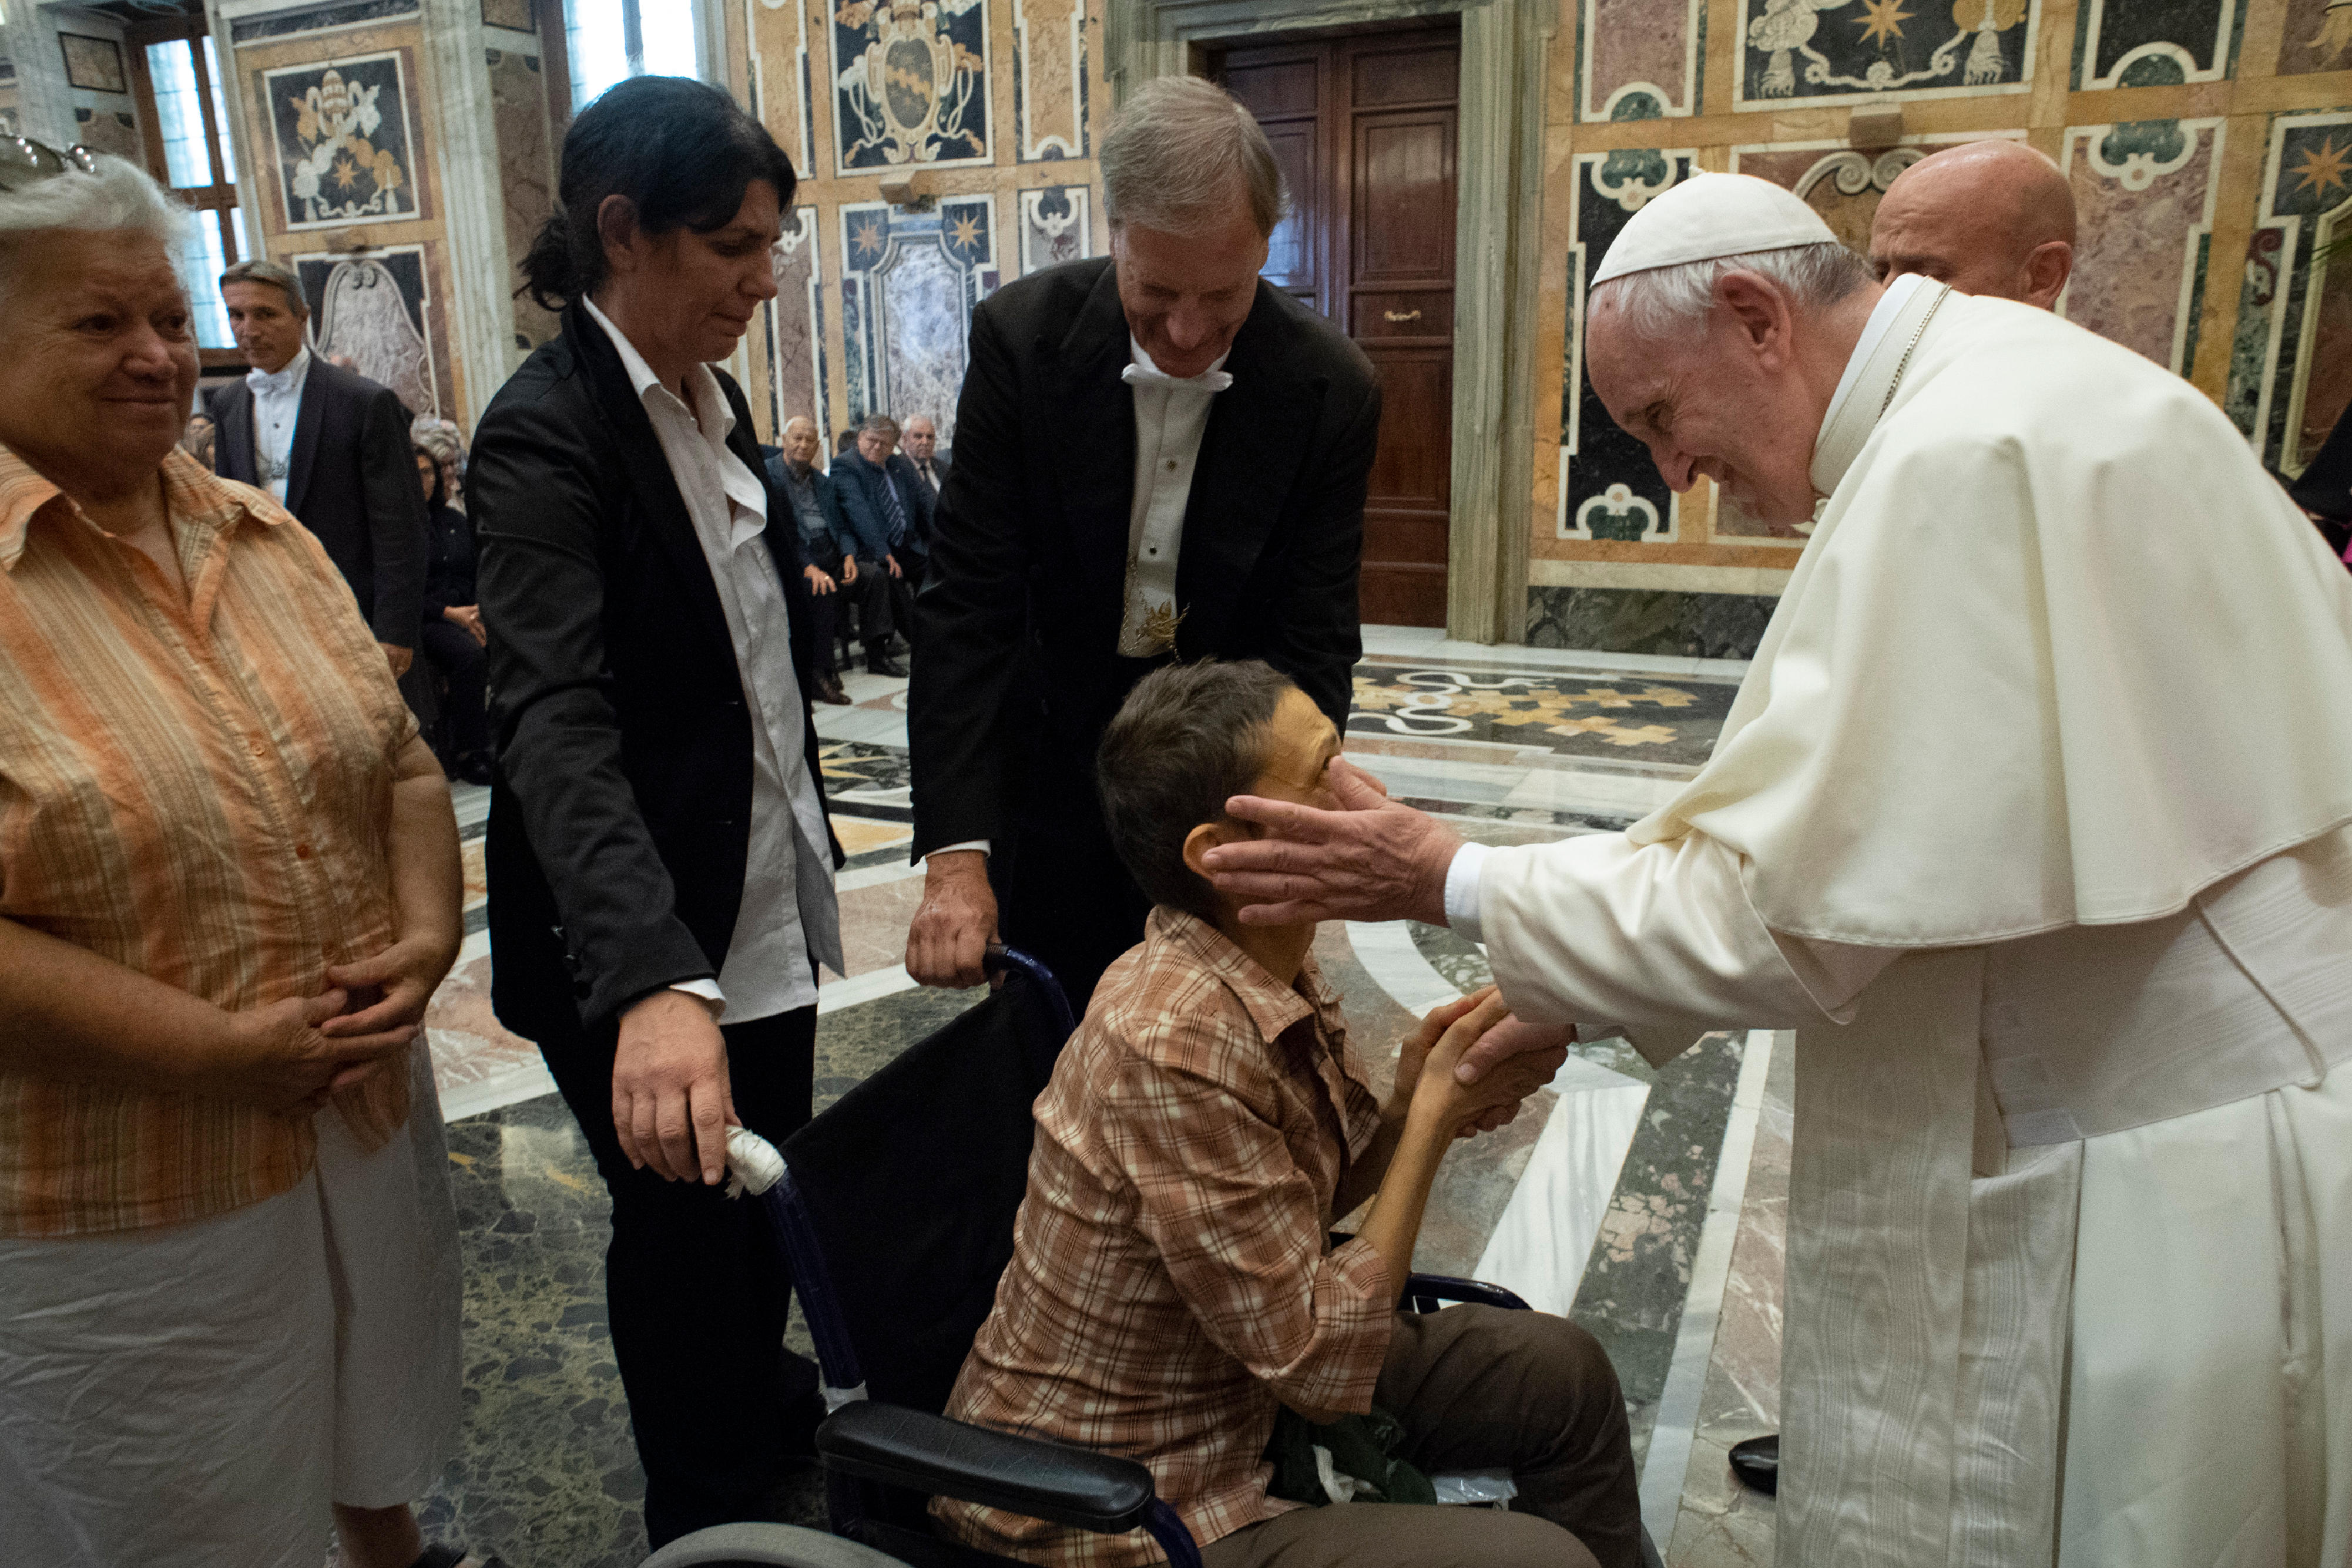 El Santo Padre bendice a un trabajador inválido © Vatican Media